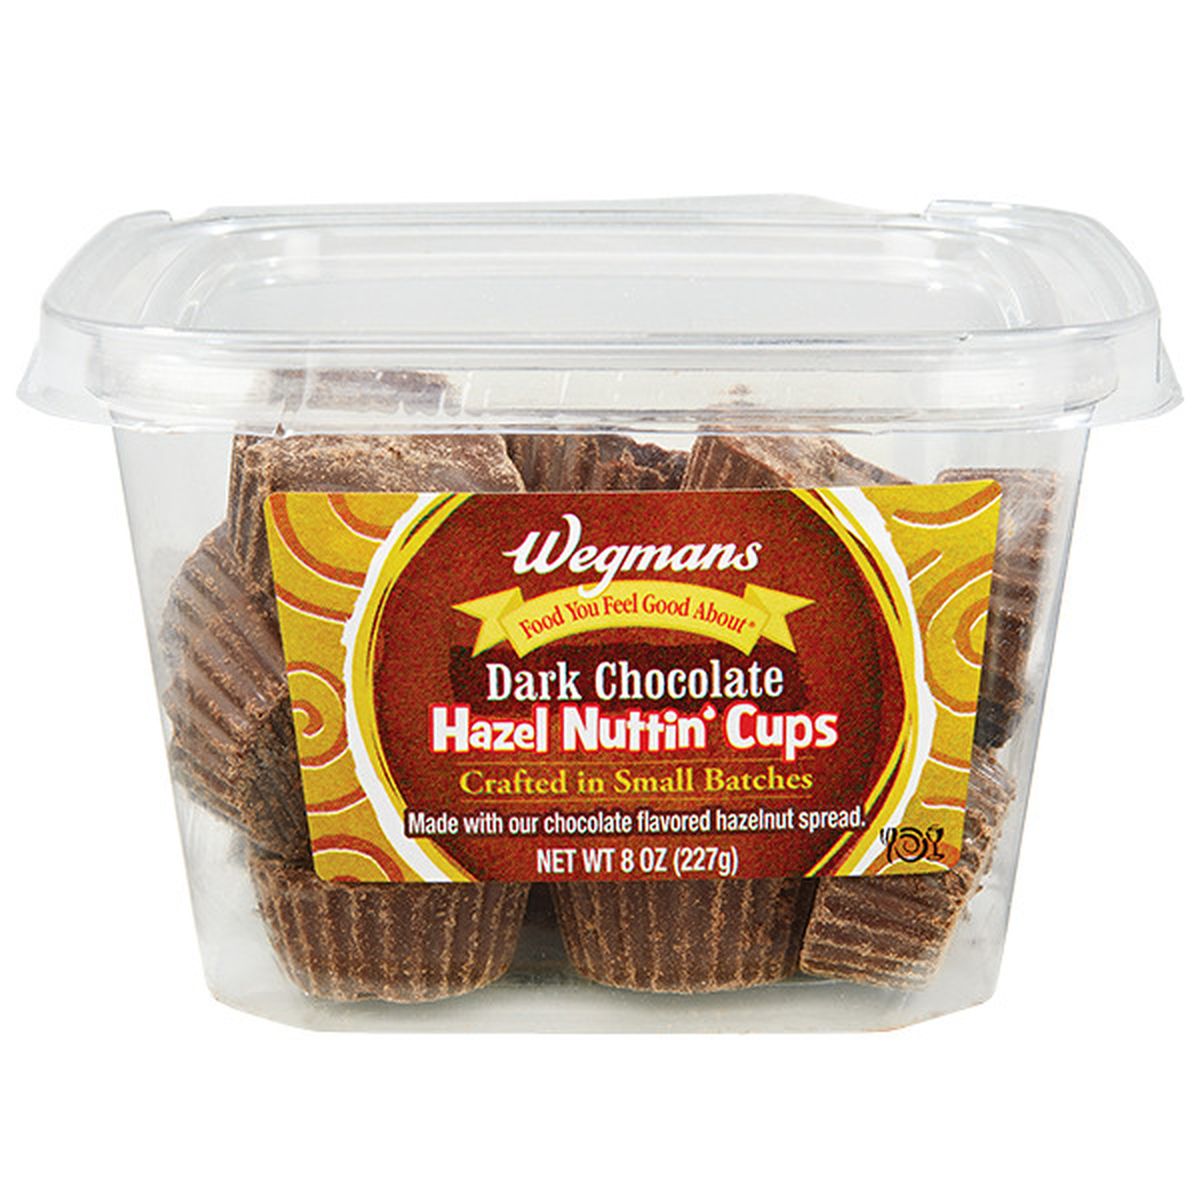 Calories in Wegmans Dark Chocolate Hazel Nuttin' Cups